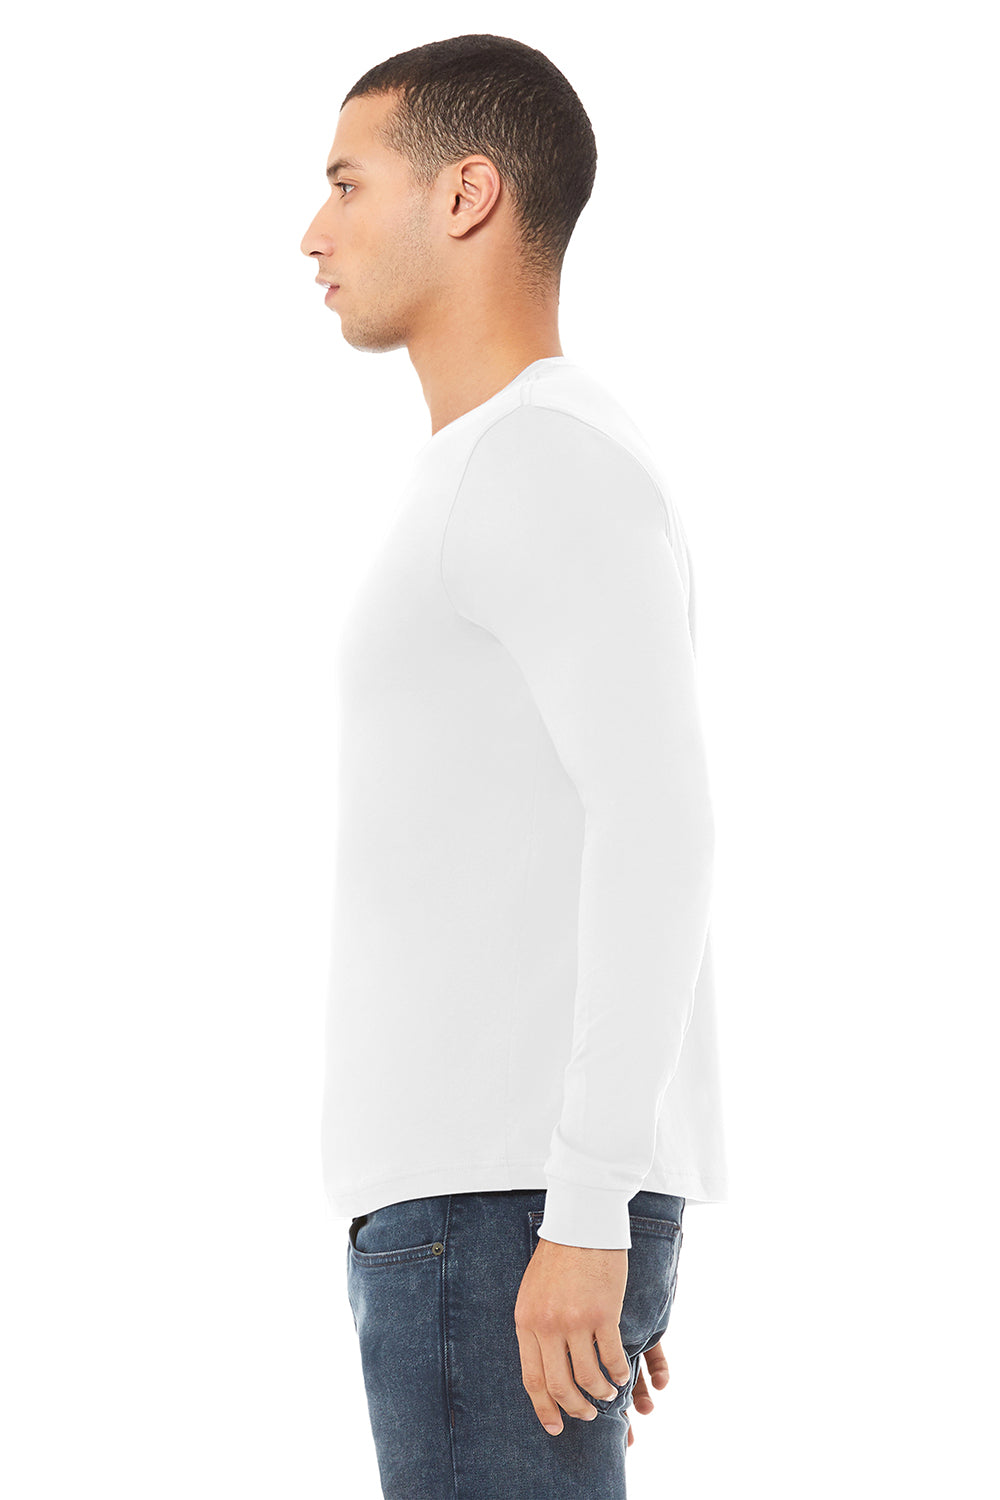 Bella + Canvas BC3501/3501 Mens Jersey Long Sleeve Crewneck T-Shirt White Model Side